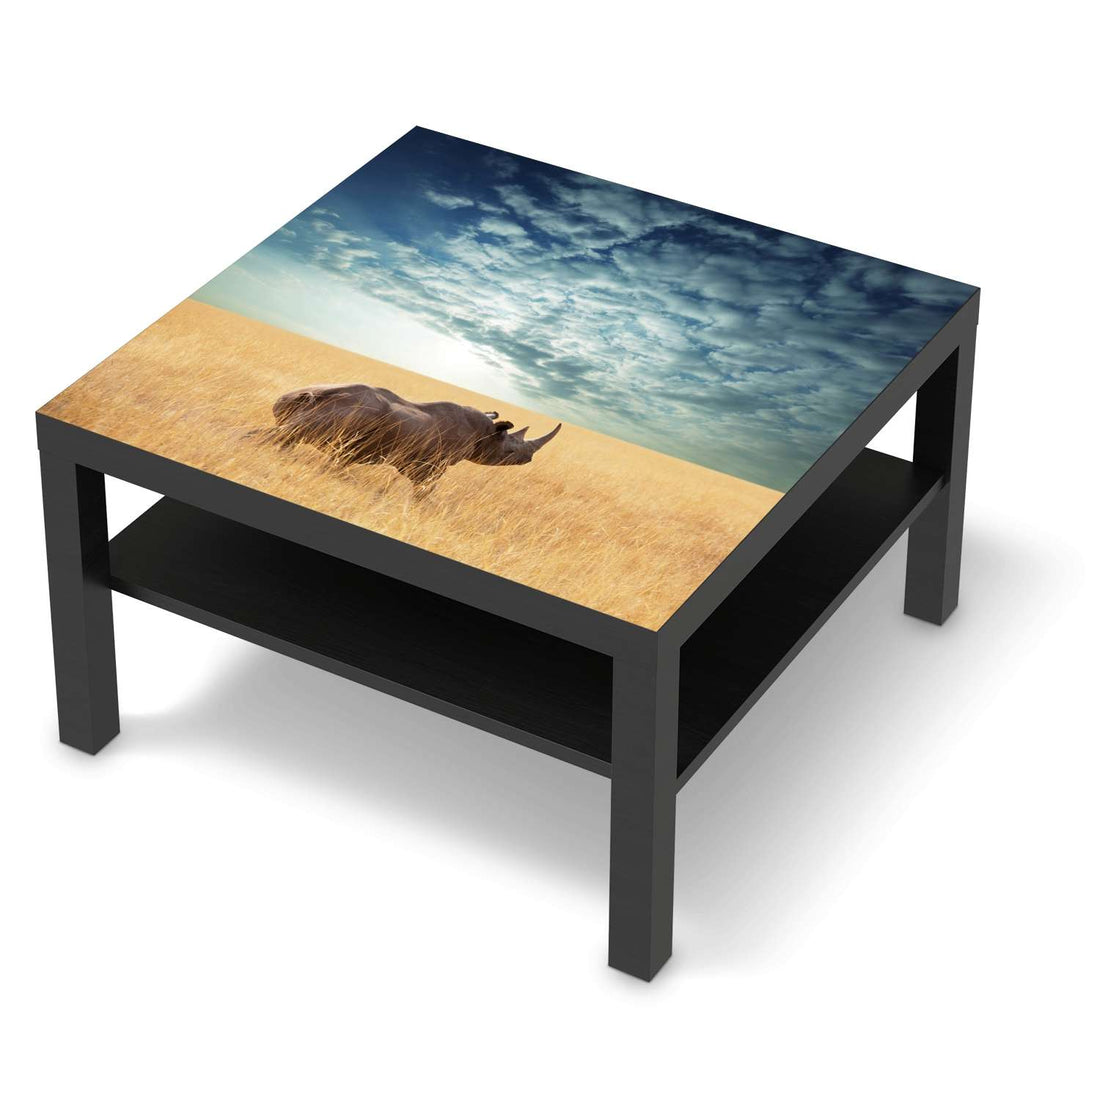 Selbstklebende Folie Rhino - IKEA Lack Tisch 78x78 cm - schwarz